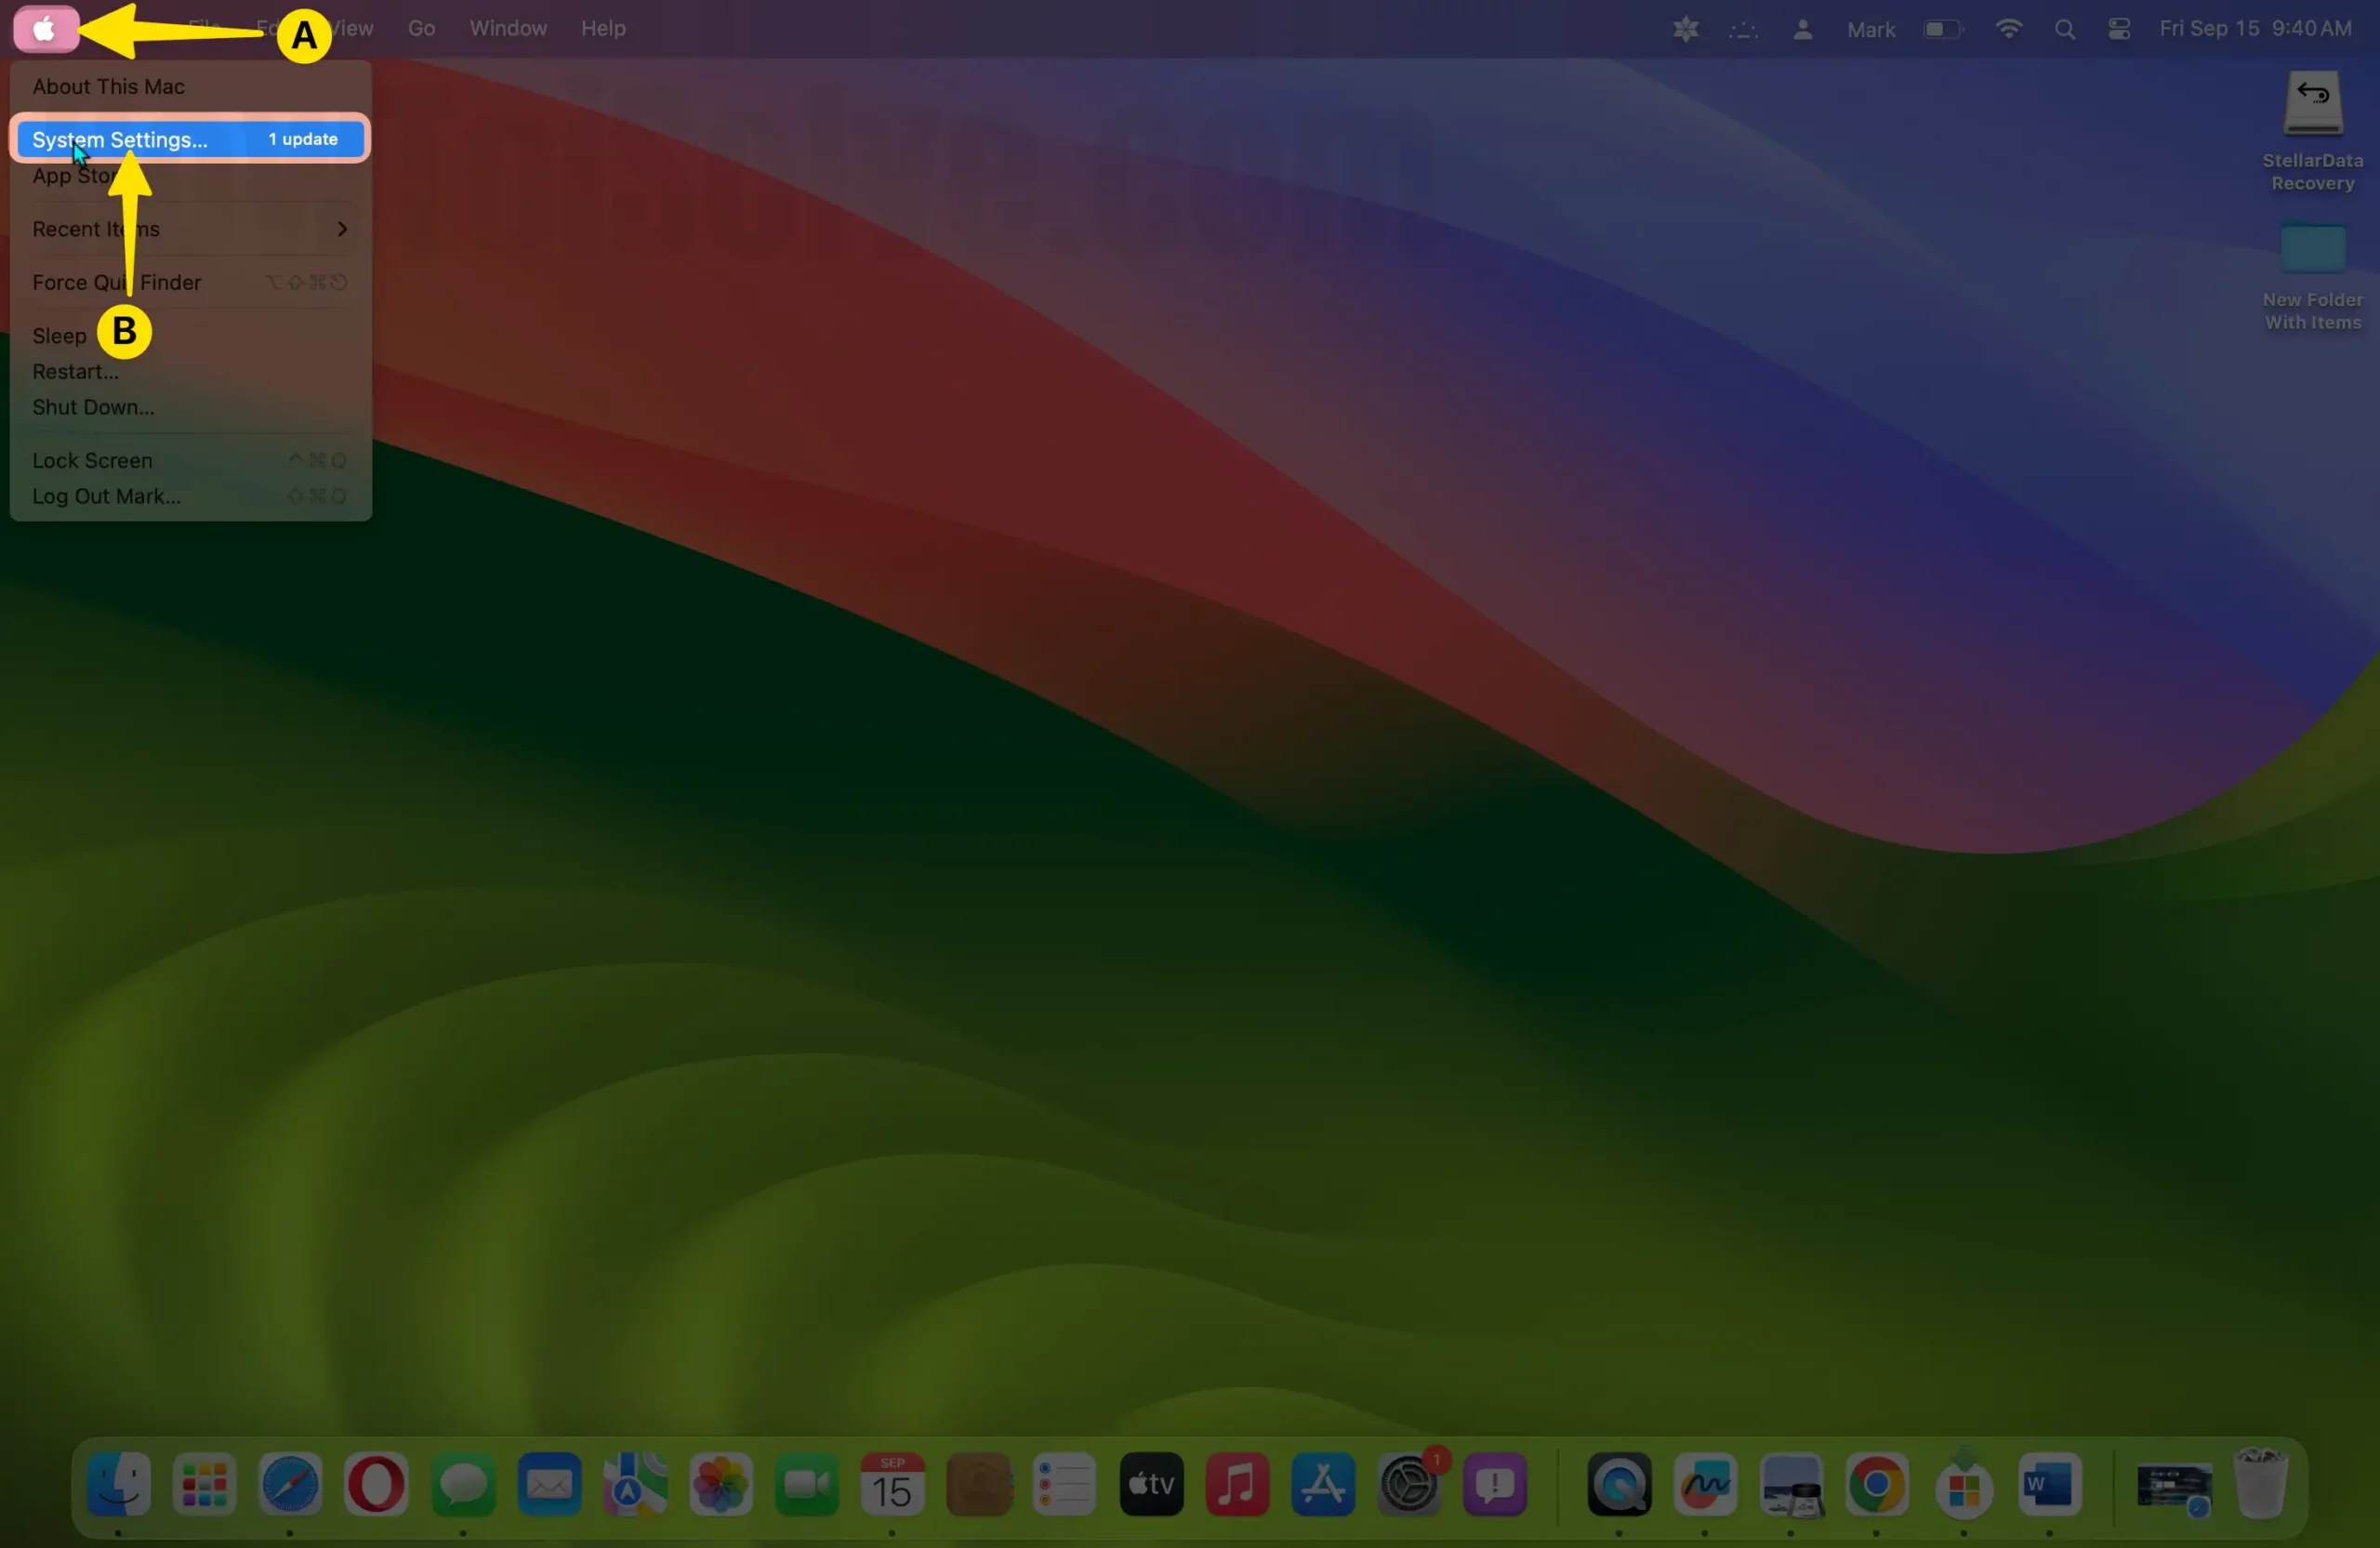 Open System Settings On Mac